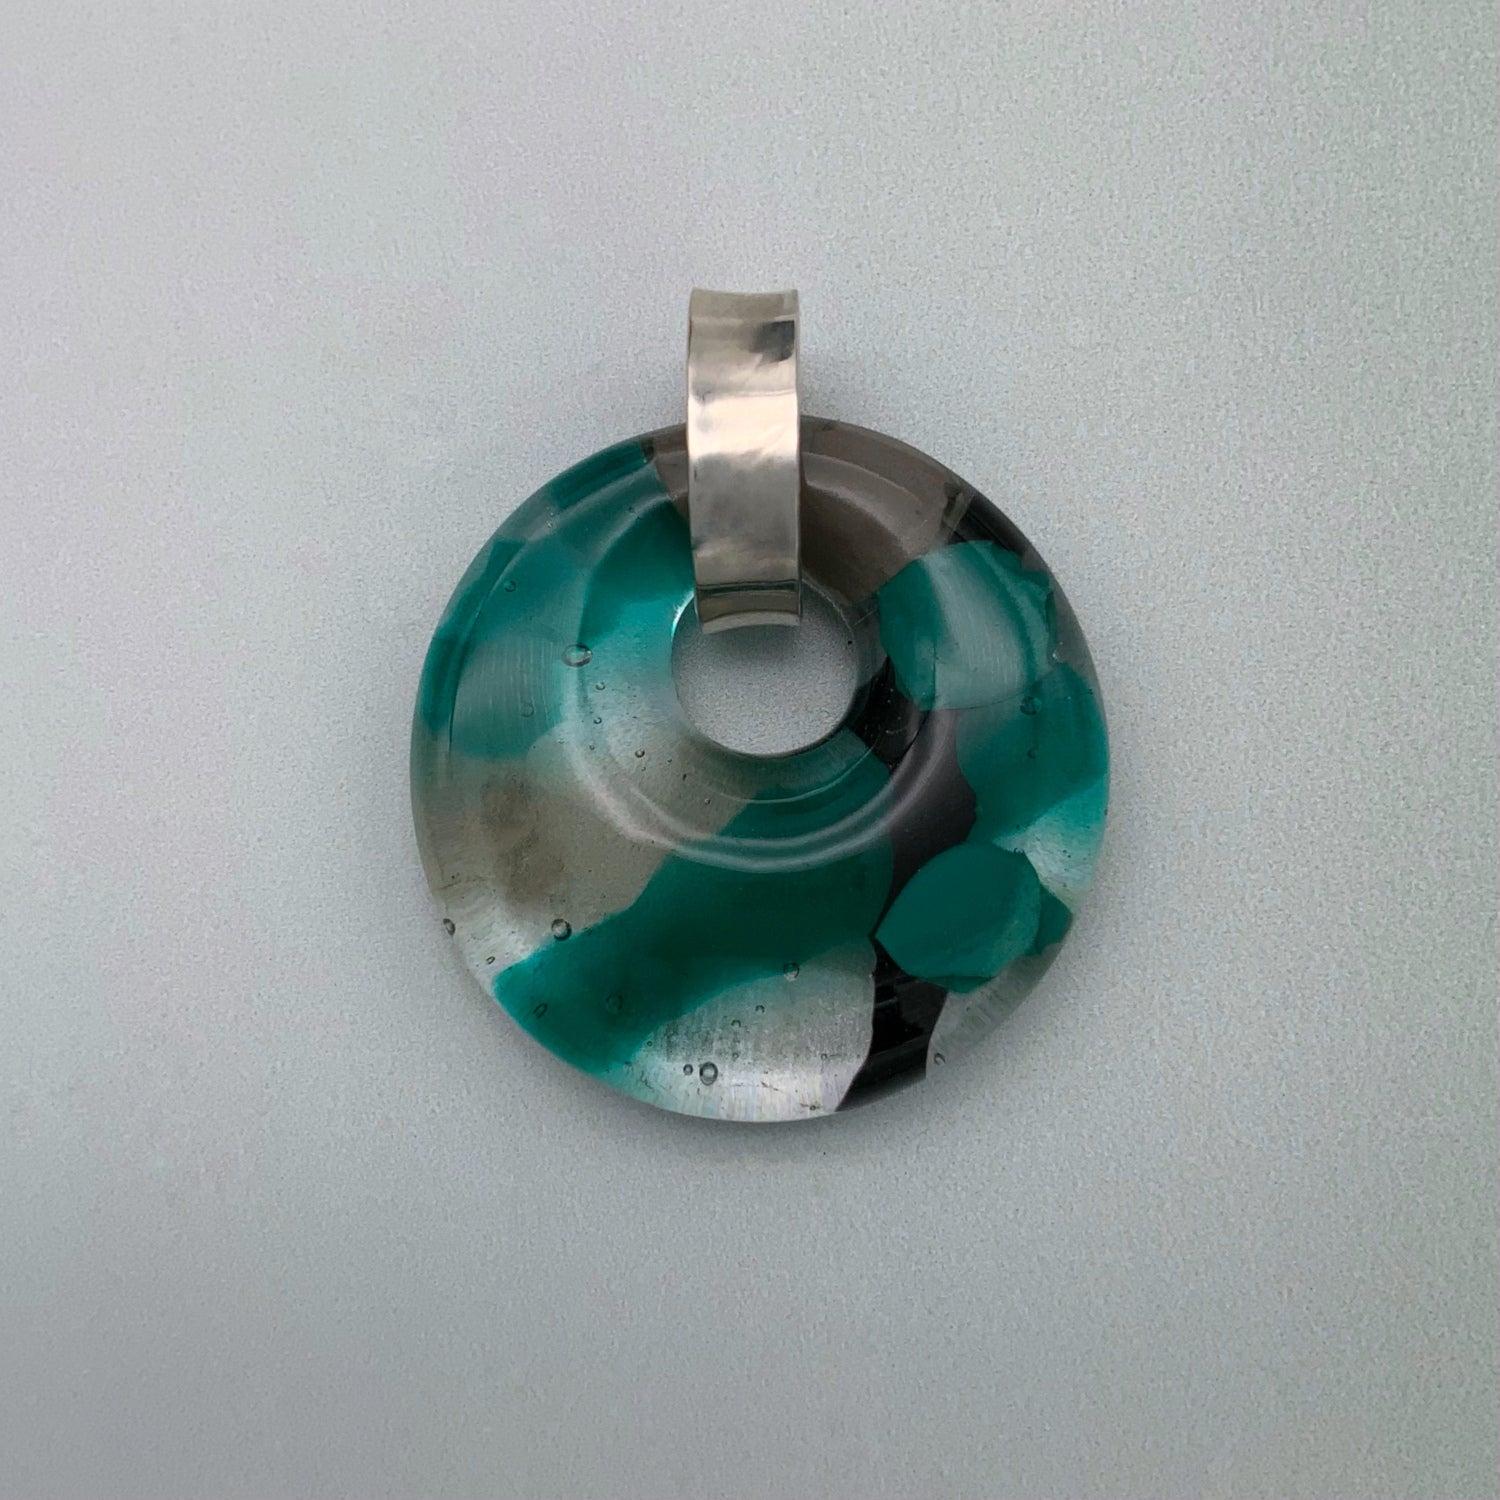 Green murrini glass holey pendant - 32mm